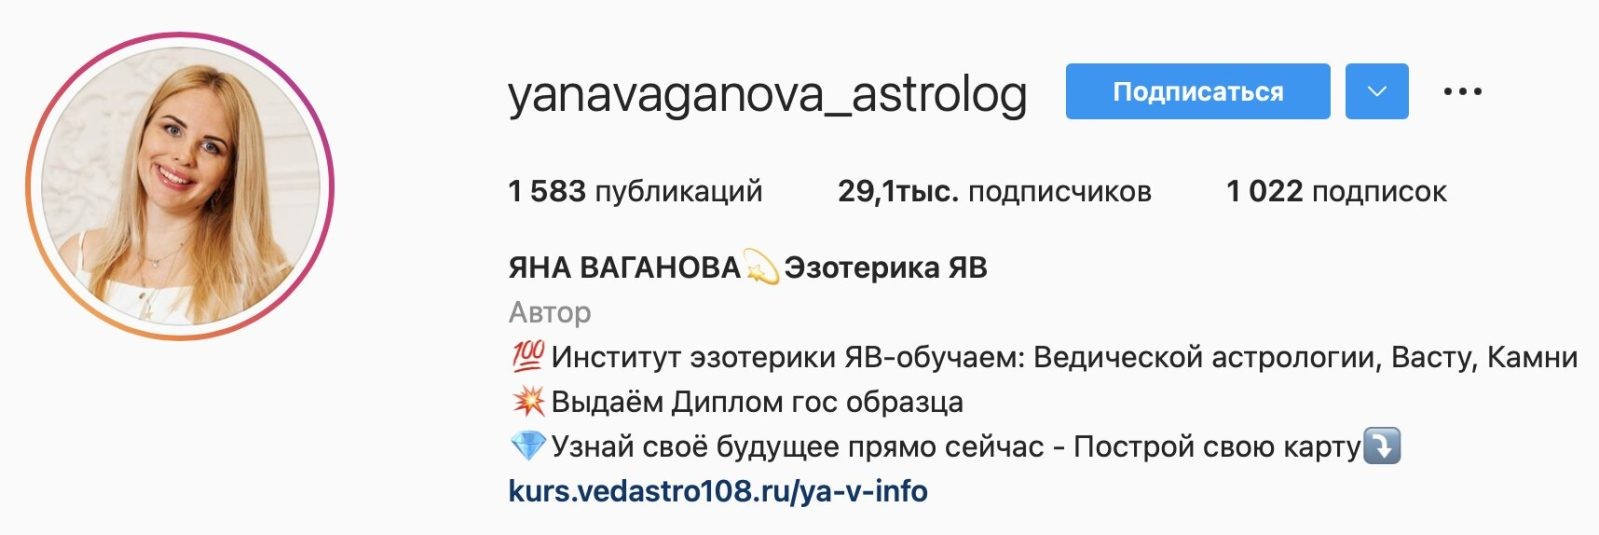 Яна Ваганова астролог инстаграм